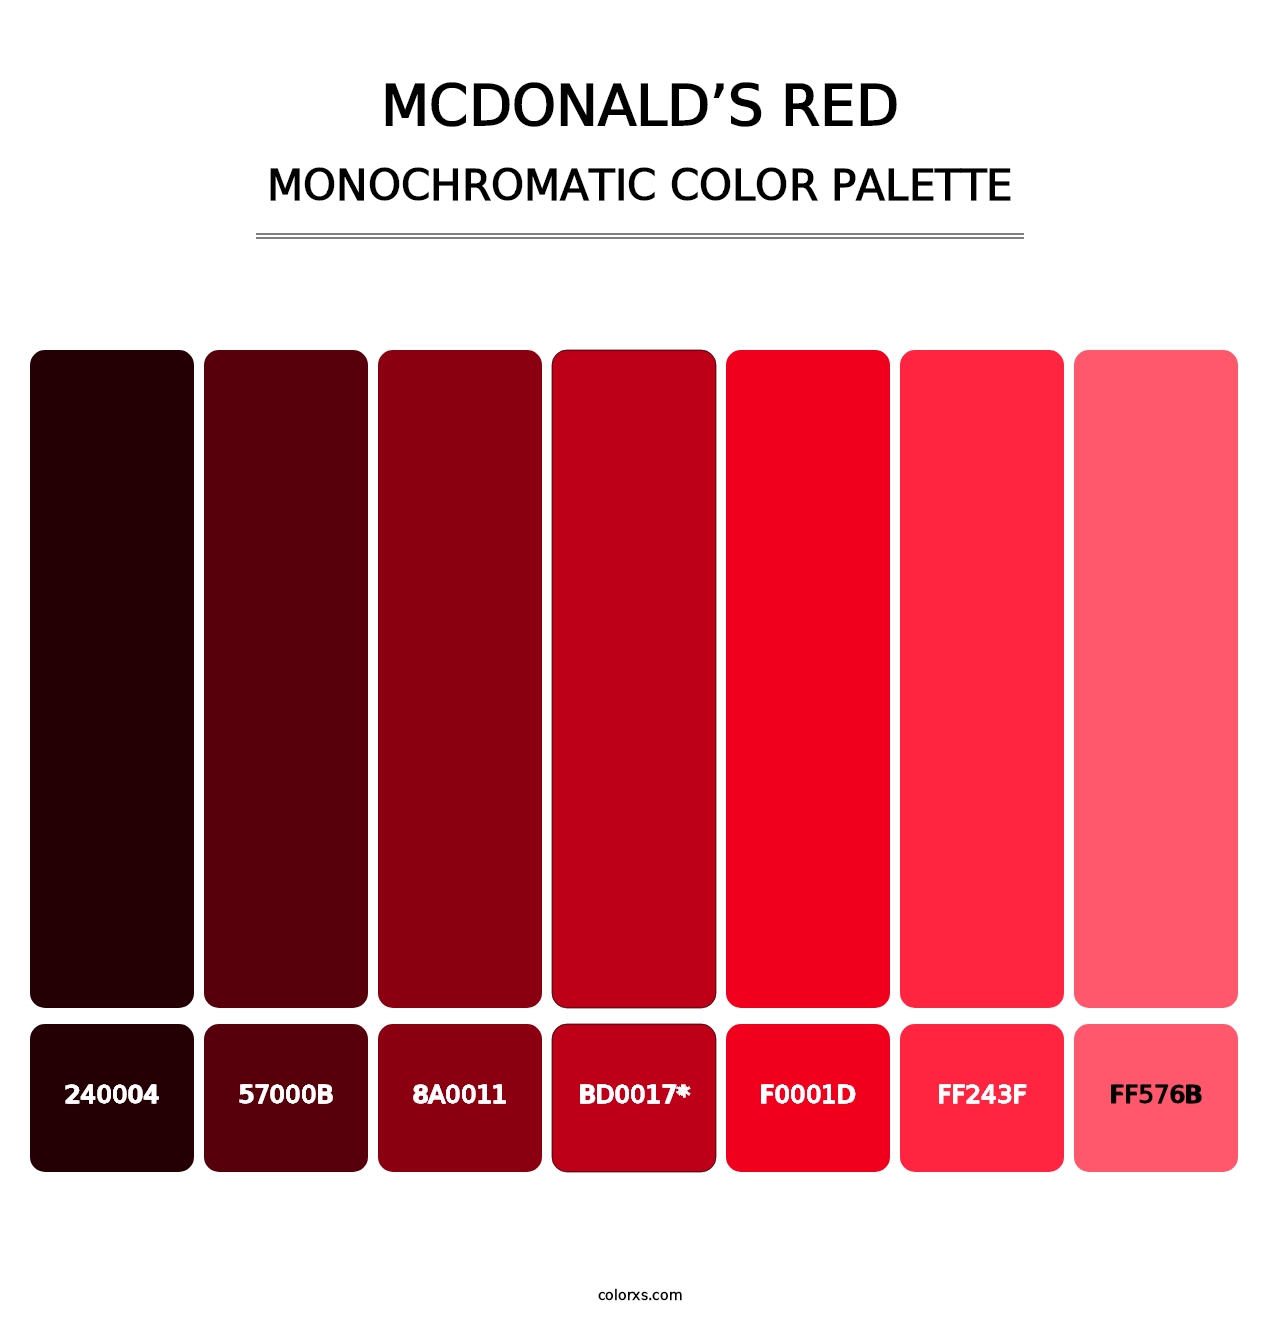 McDonald’s Red - Monochromatic Color Palette